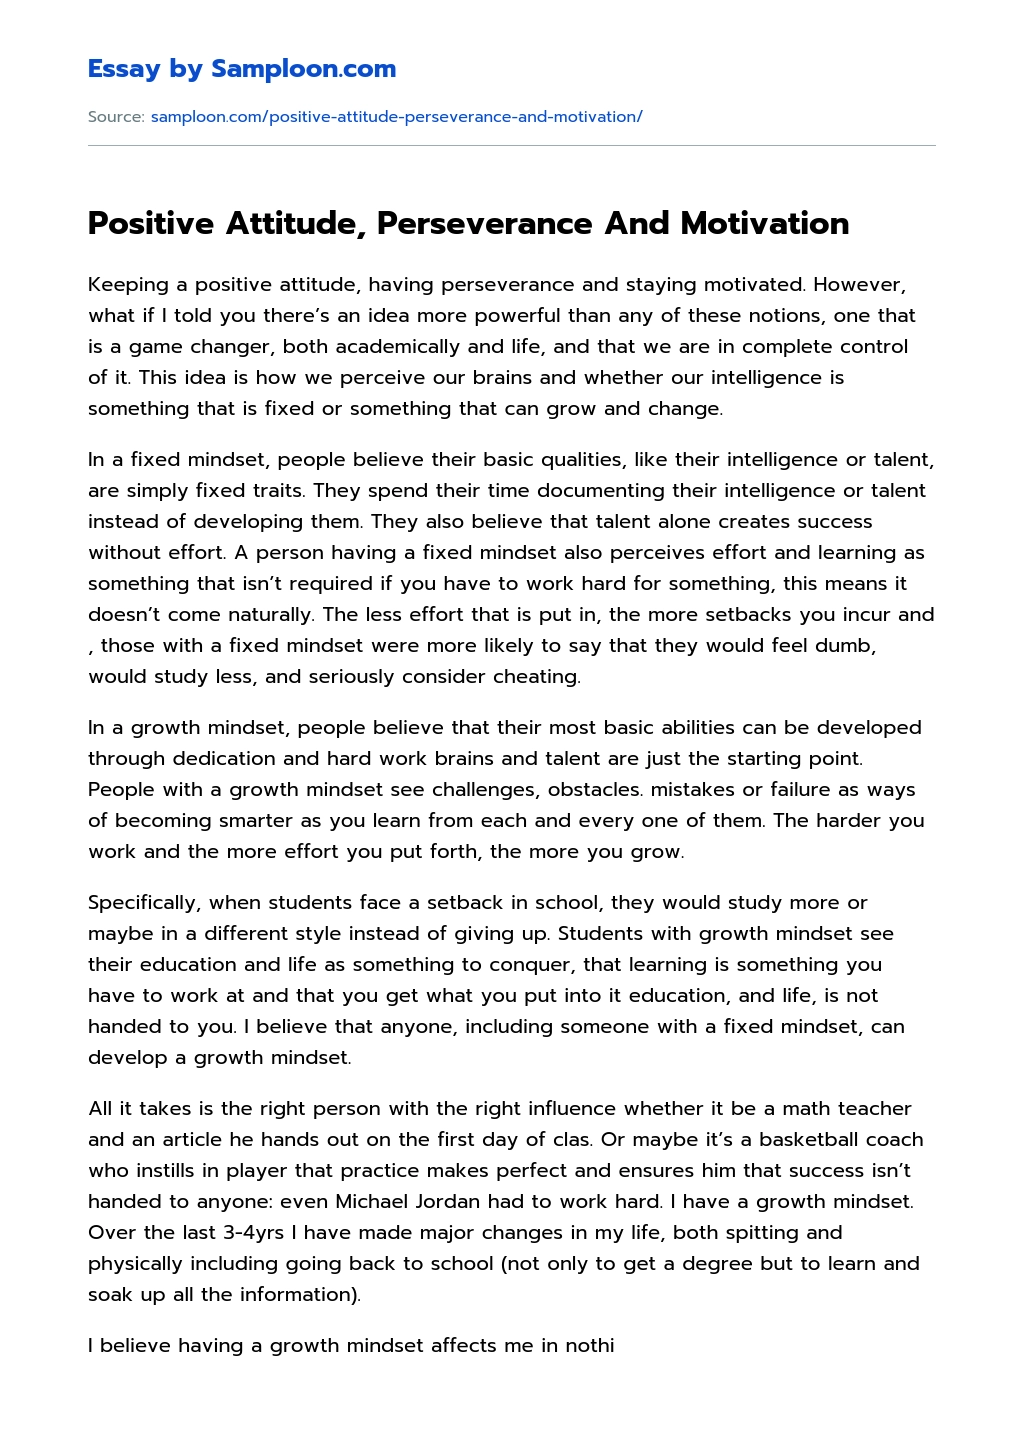 Positive Attitude, Perseverance And Motivation essay